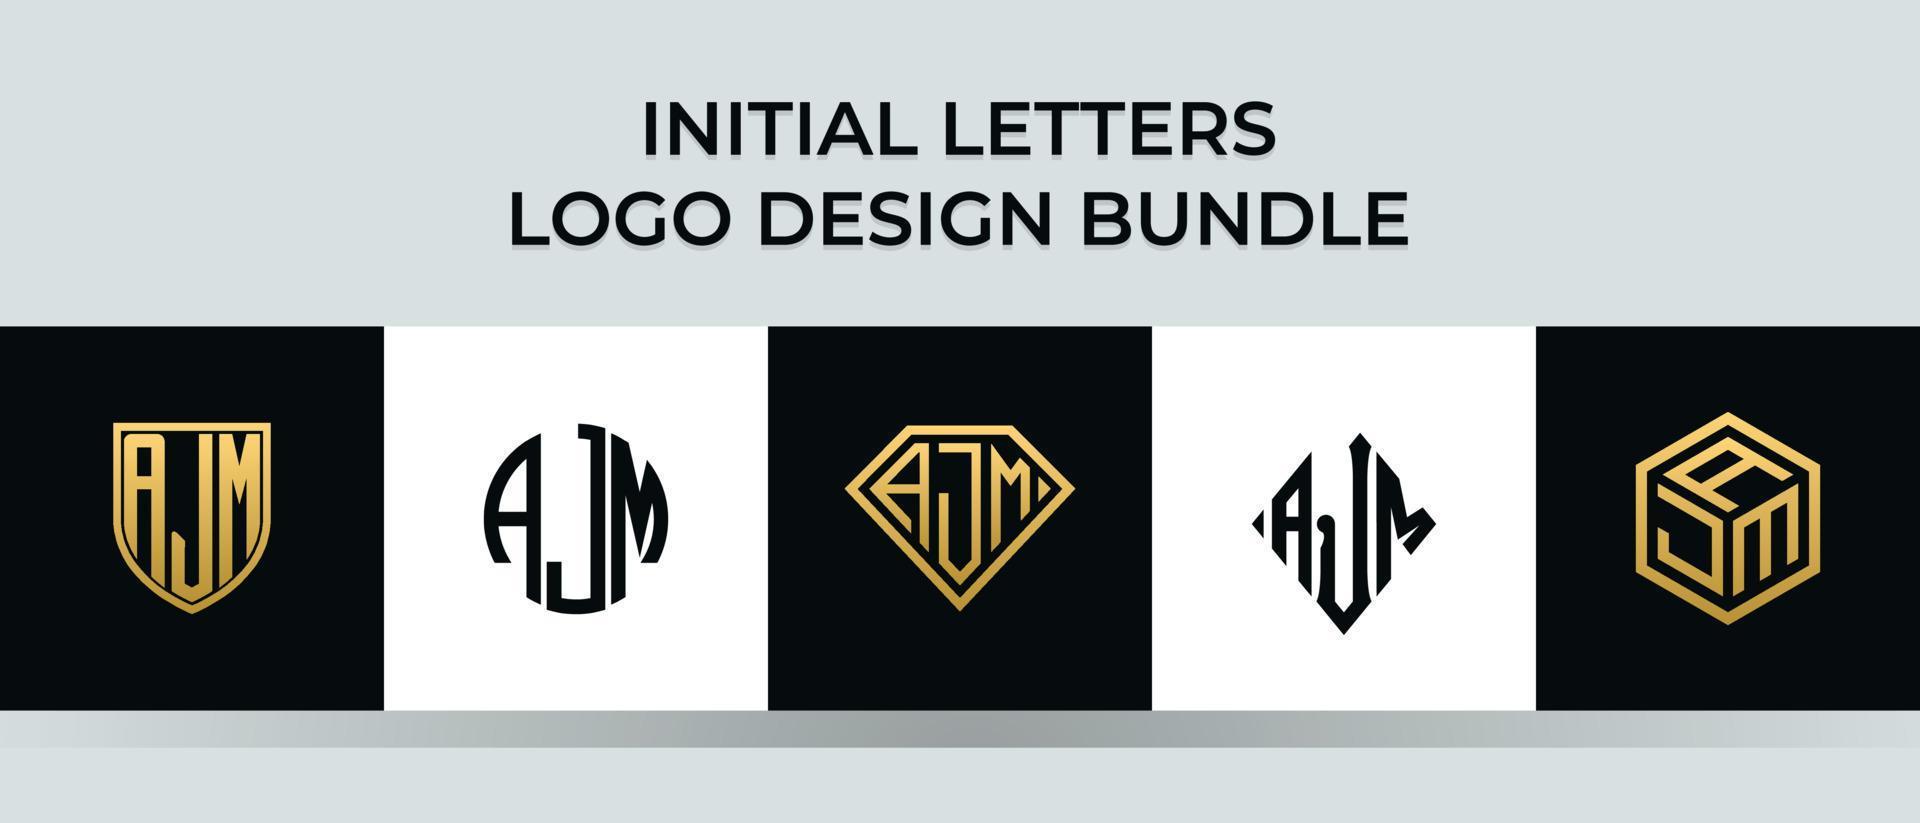 initiala bokstäver ajm logotyp design bunt vektor